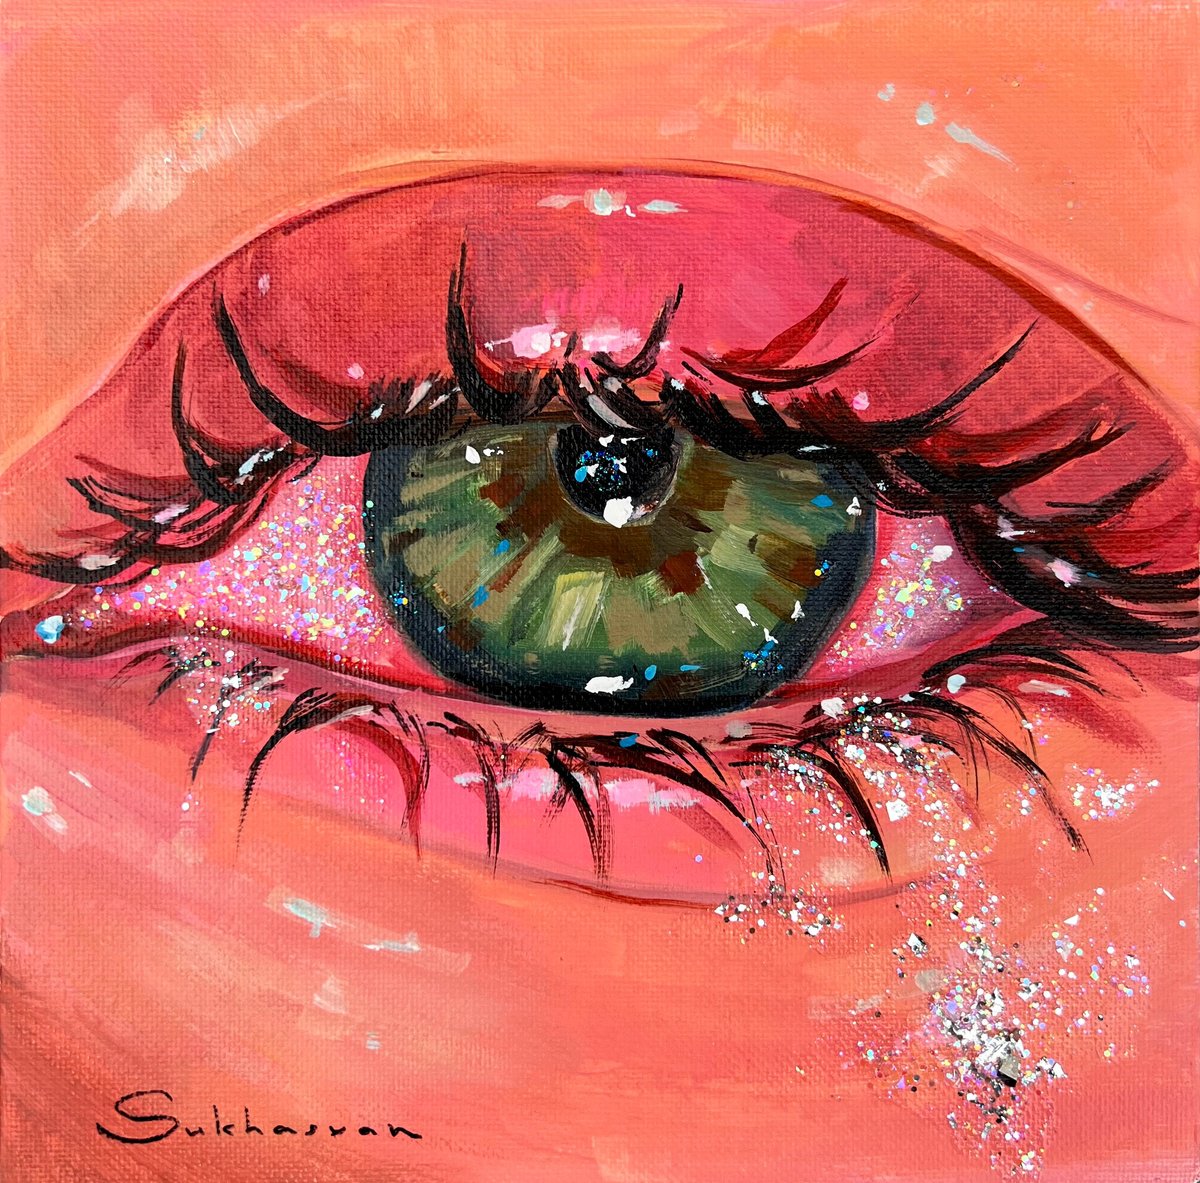 The Green Eye by Victoria Sukhasyan